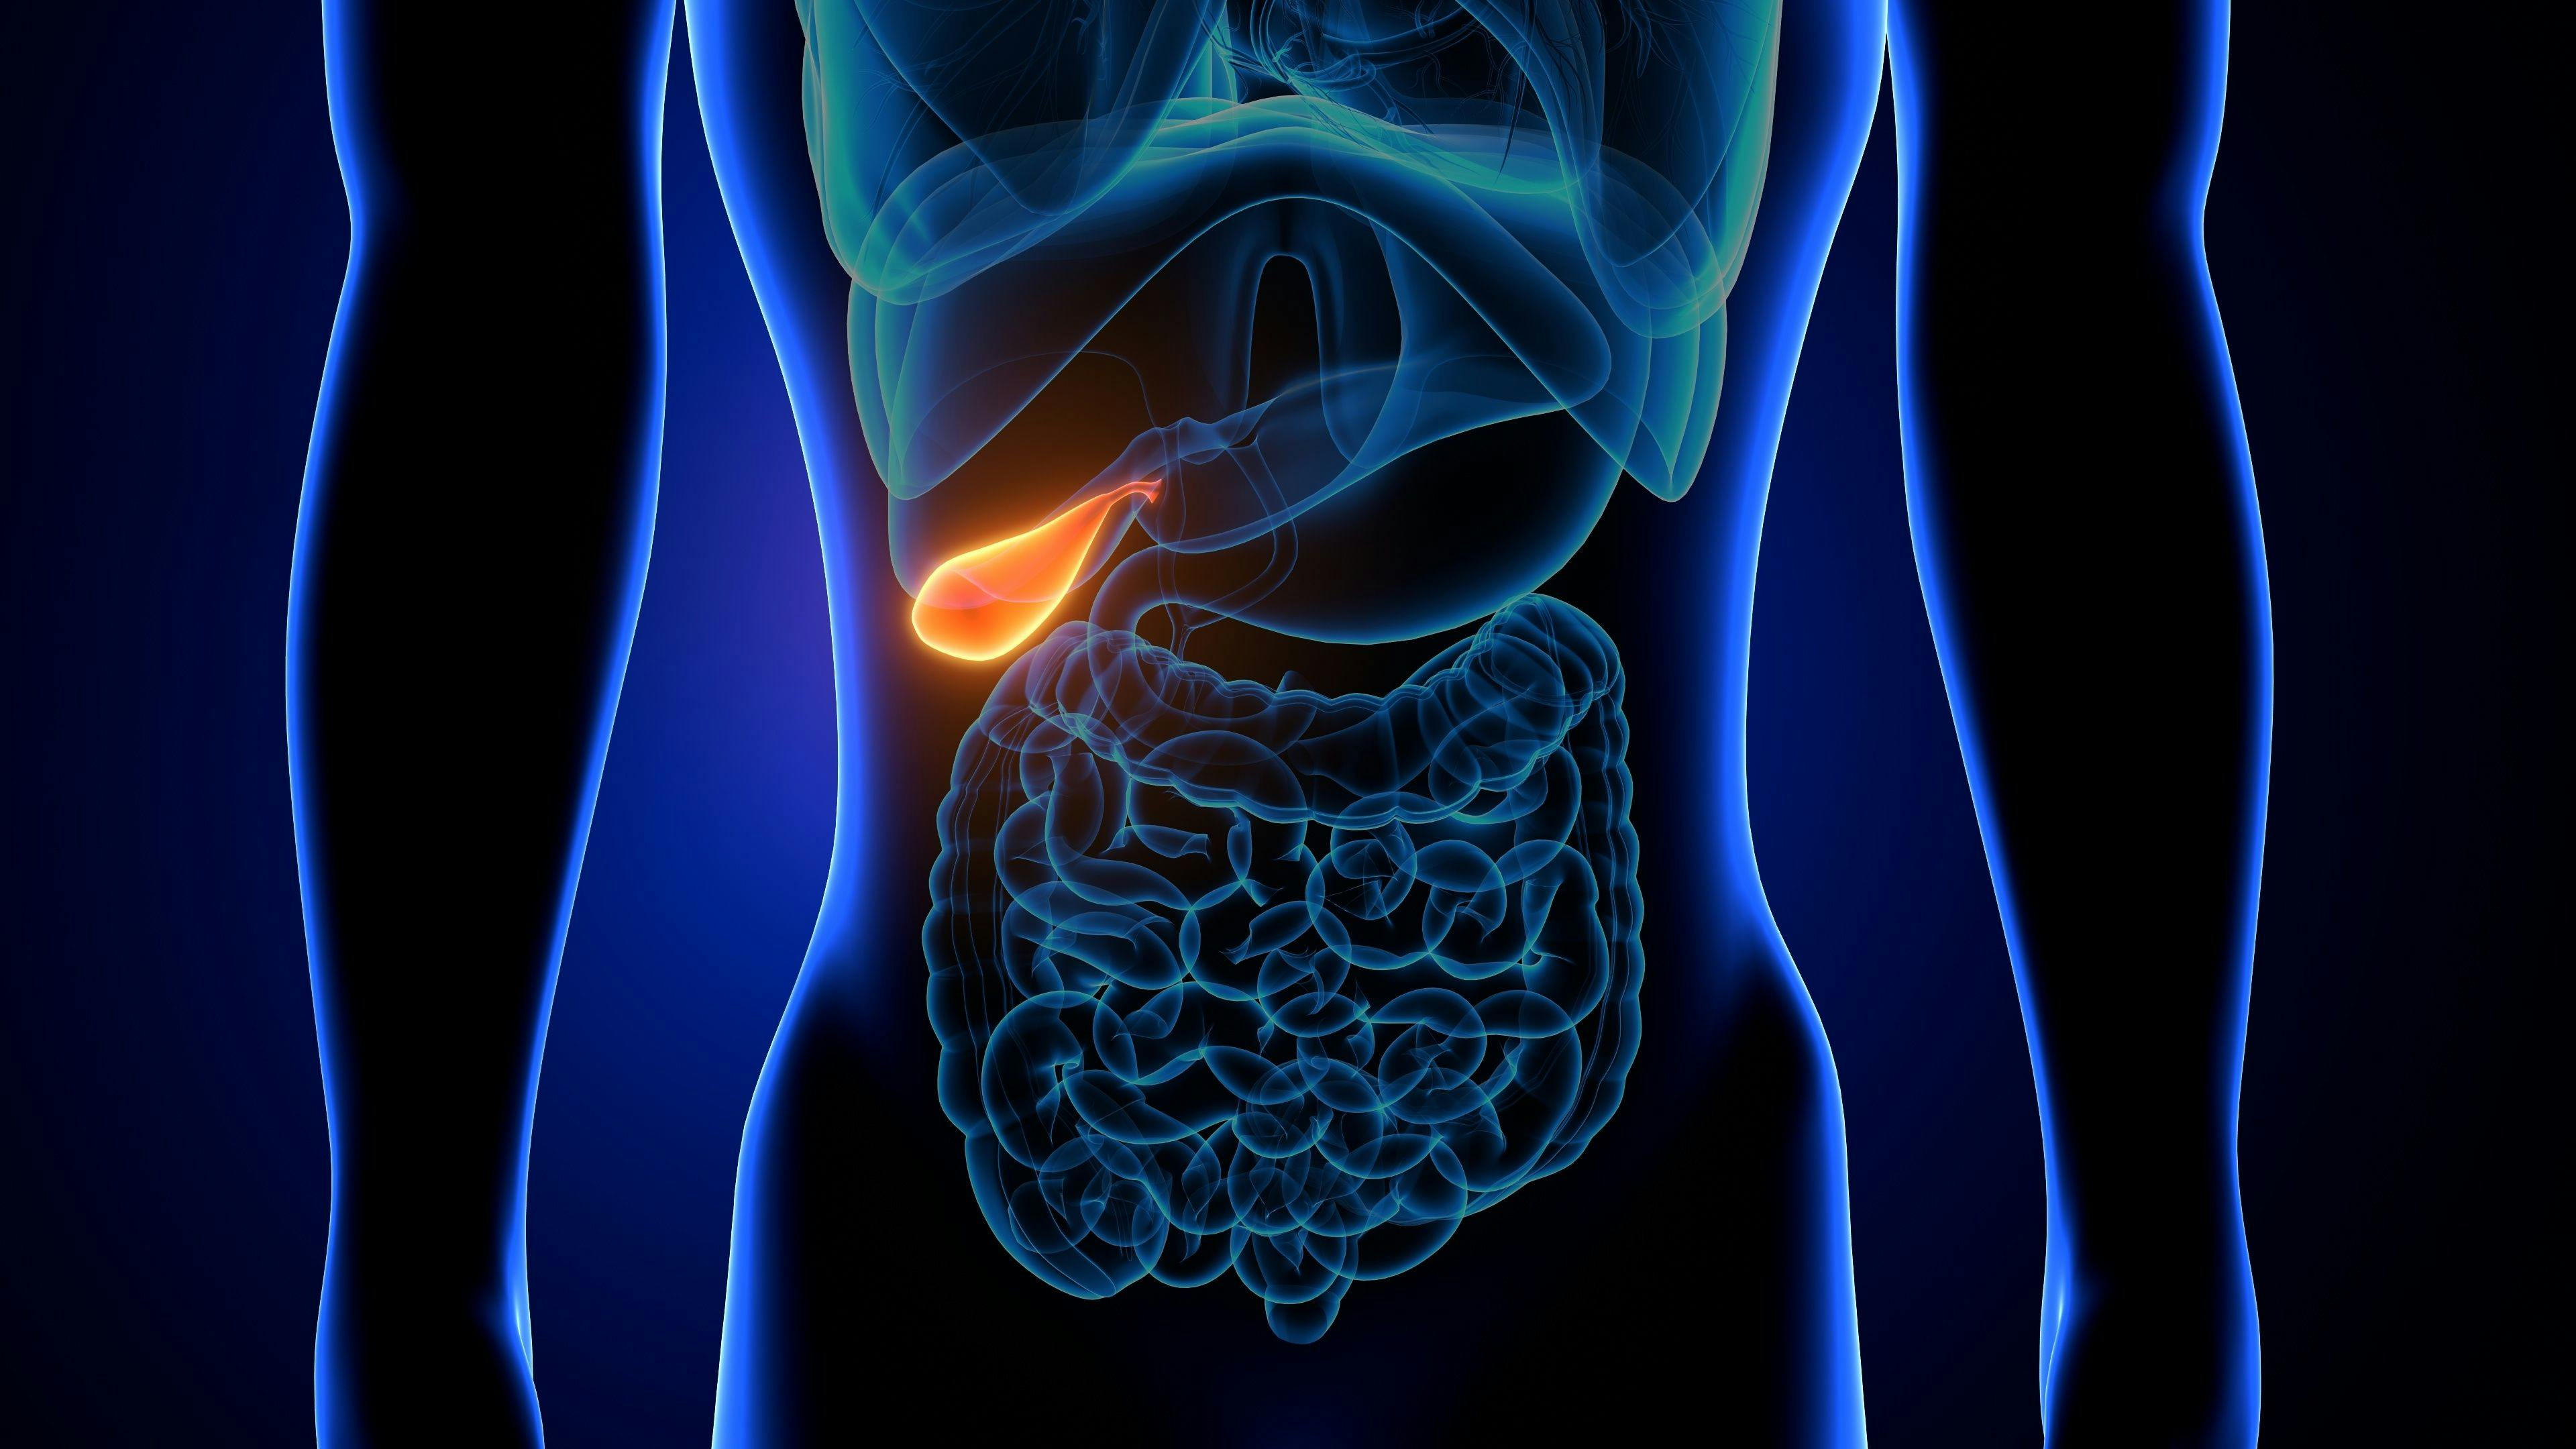 3d illustration of human internal organ gallbladder anatomy | Image Credit: © microscience - stock.adobe.com